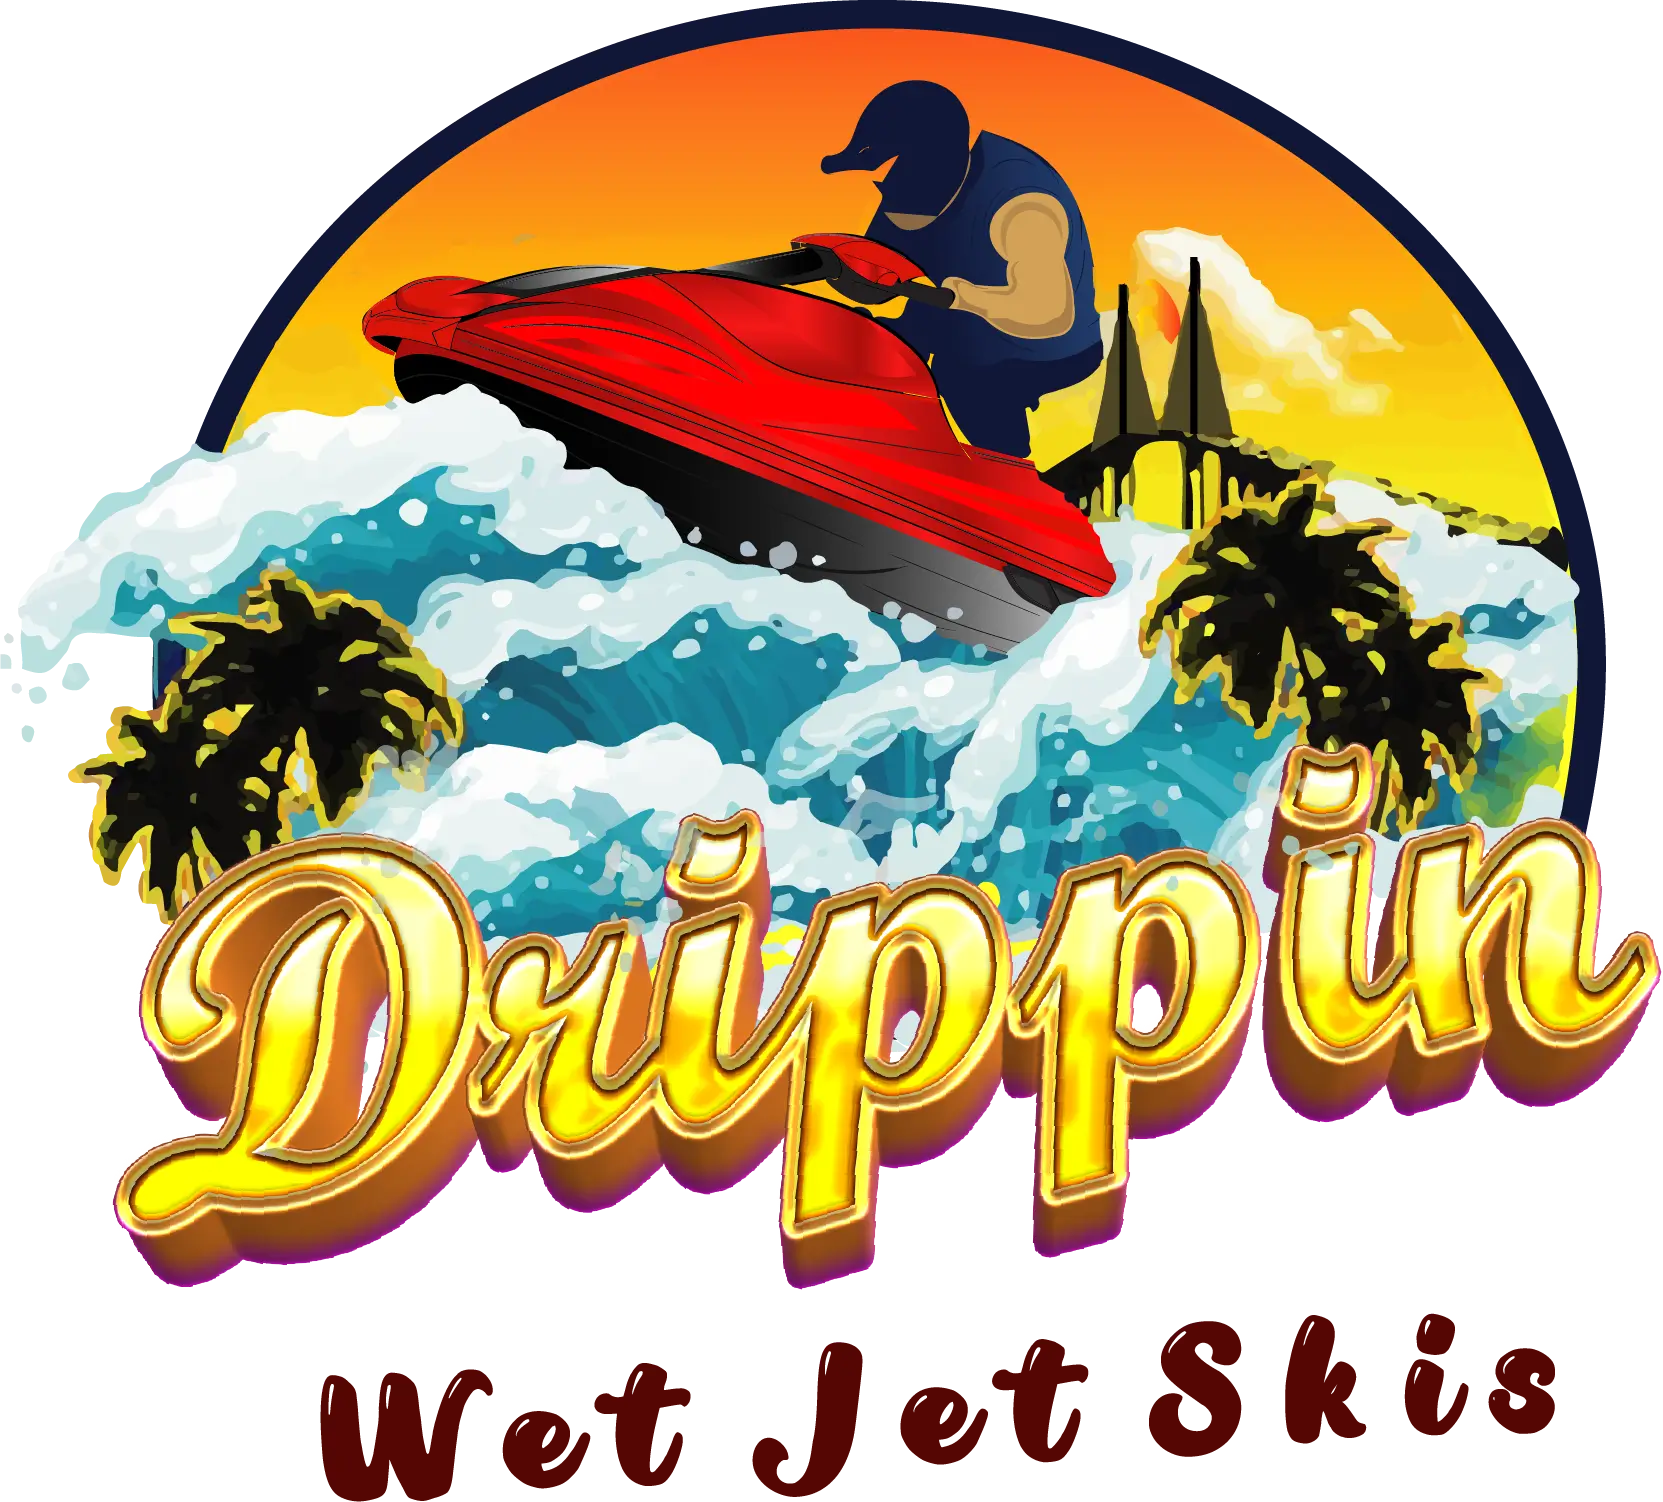 Drippin Wet Jetskis